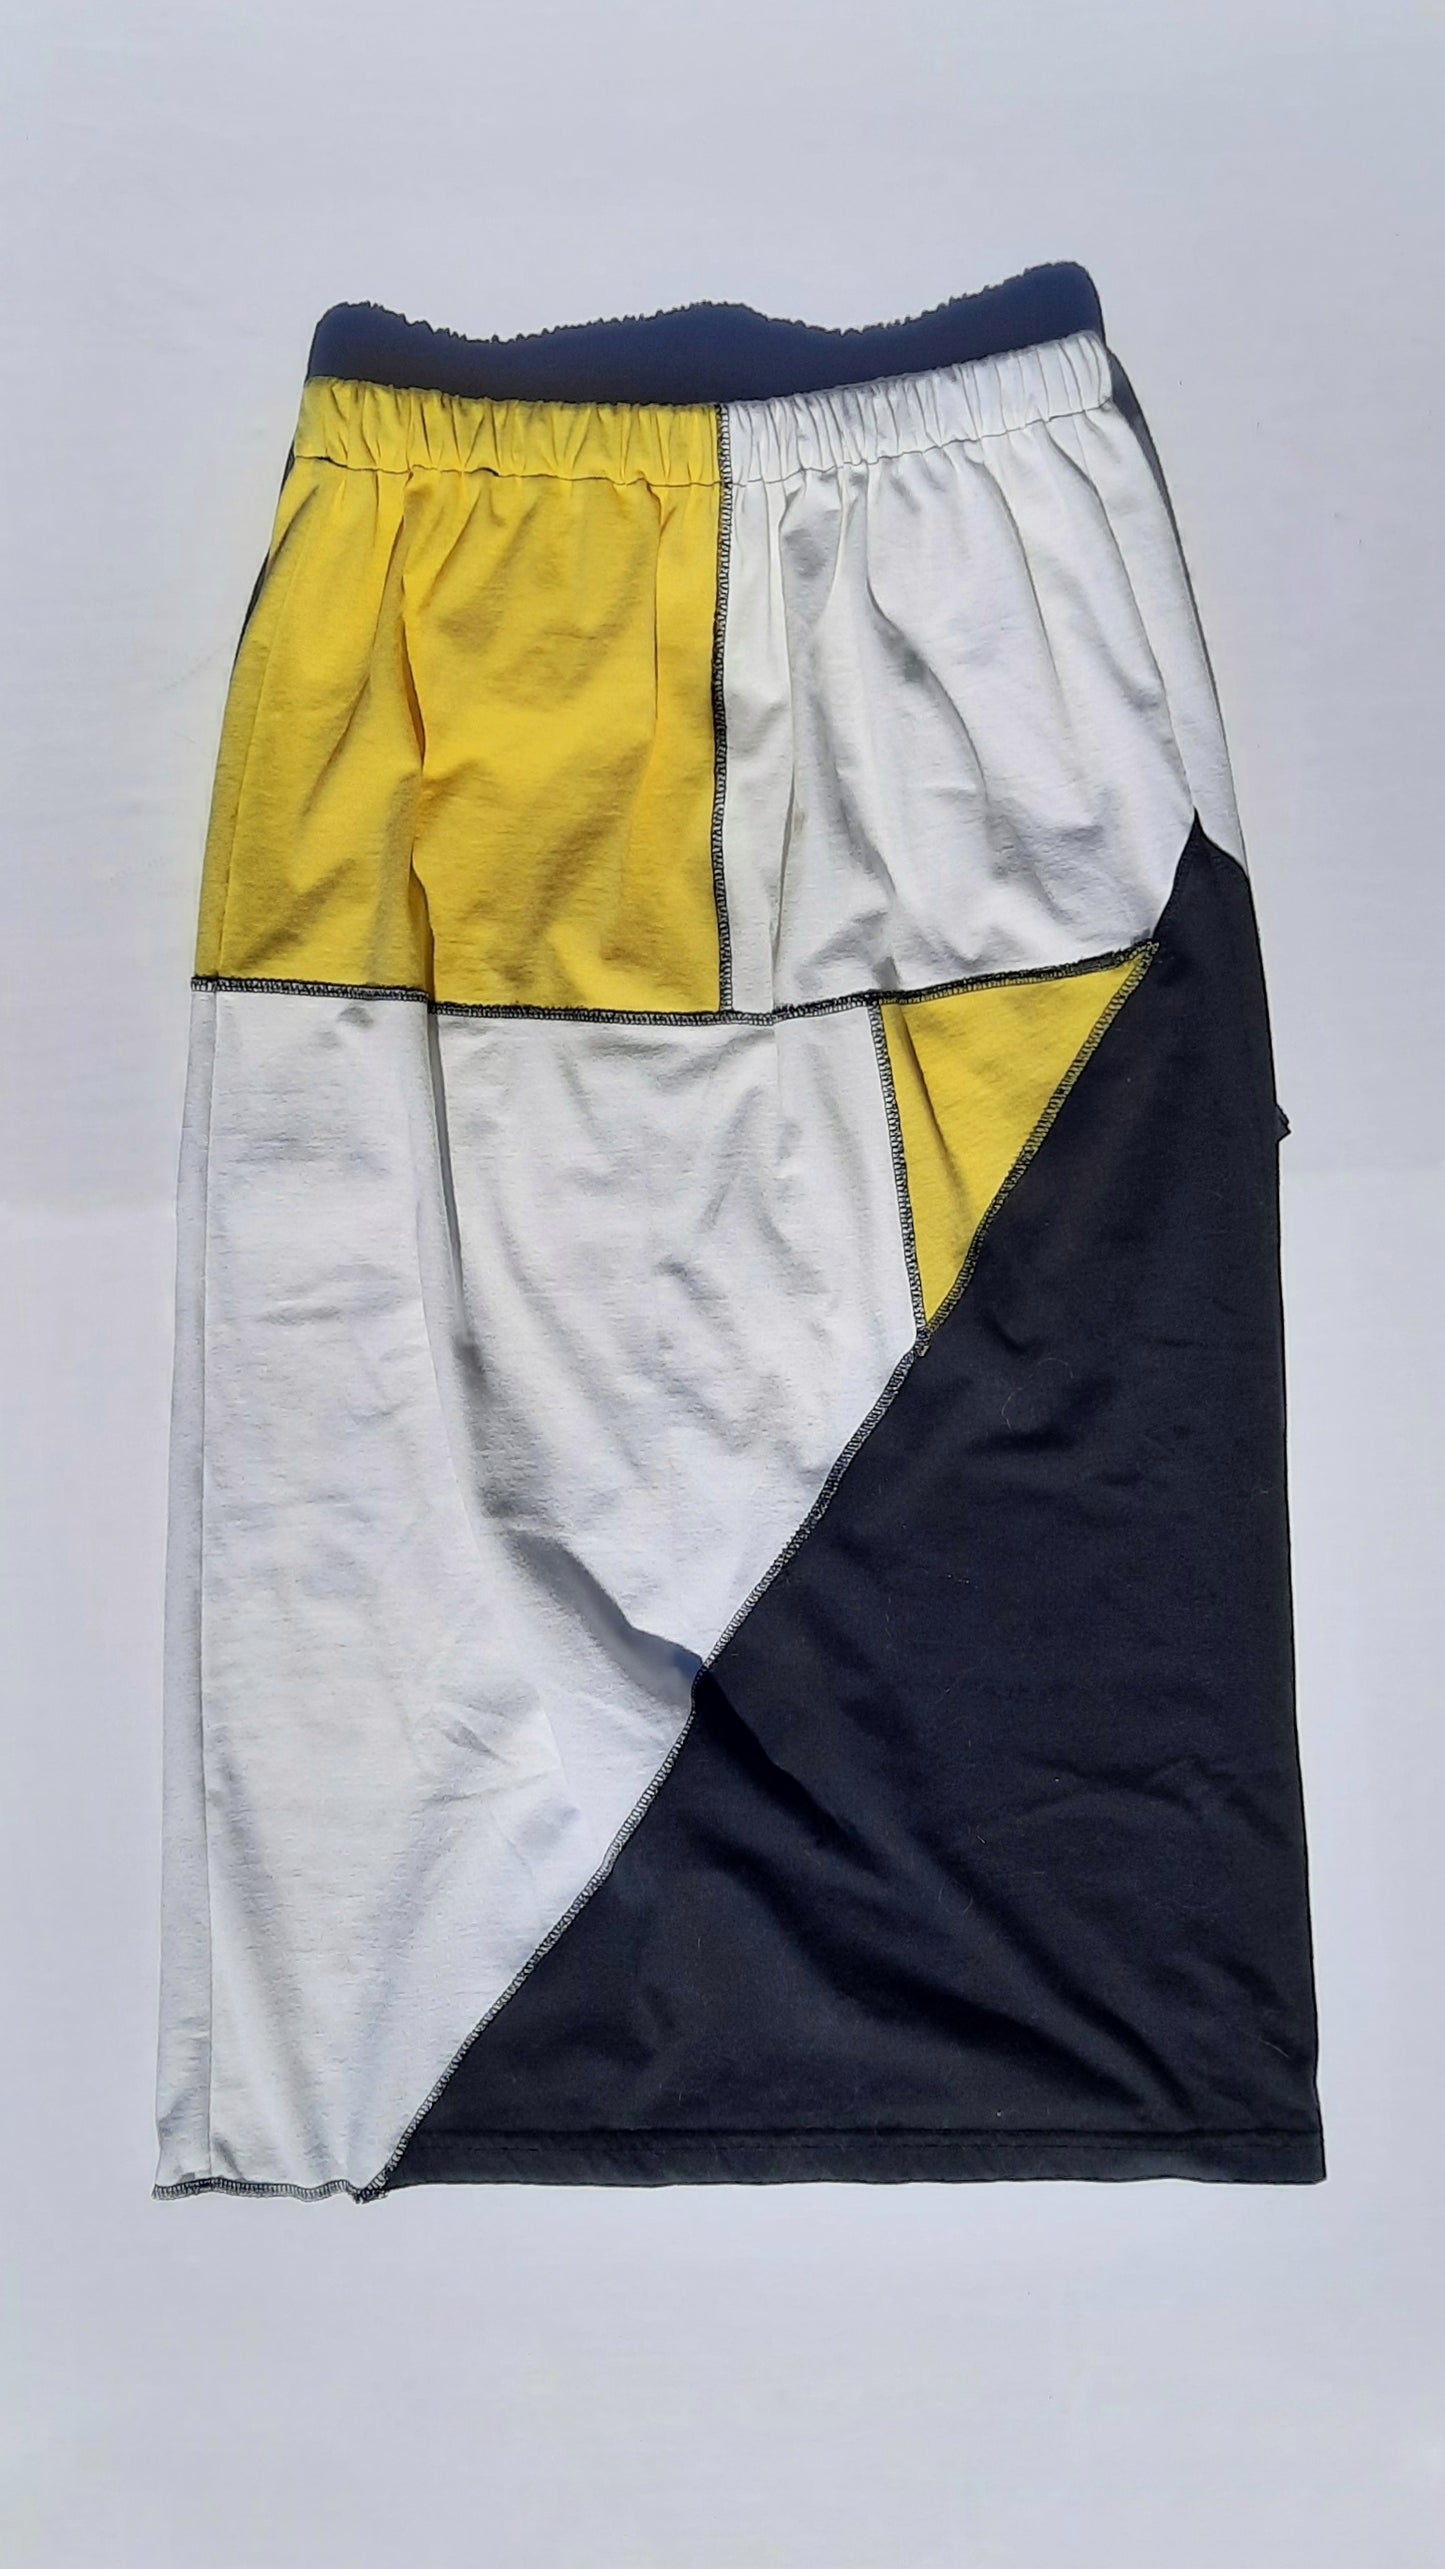 BumbleTee Reworked Nike Skirt 23-34" waist